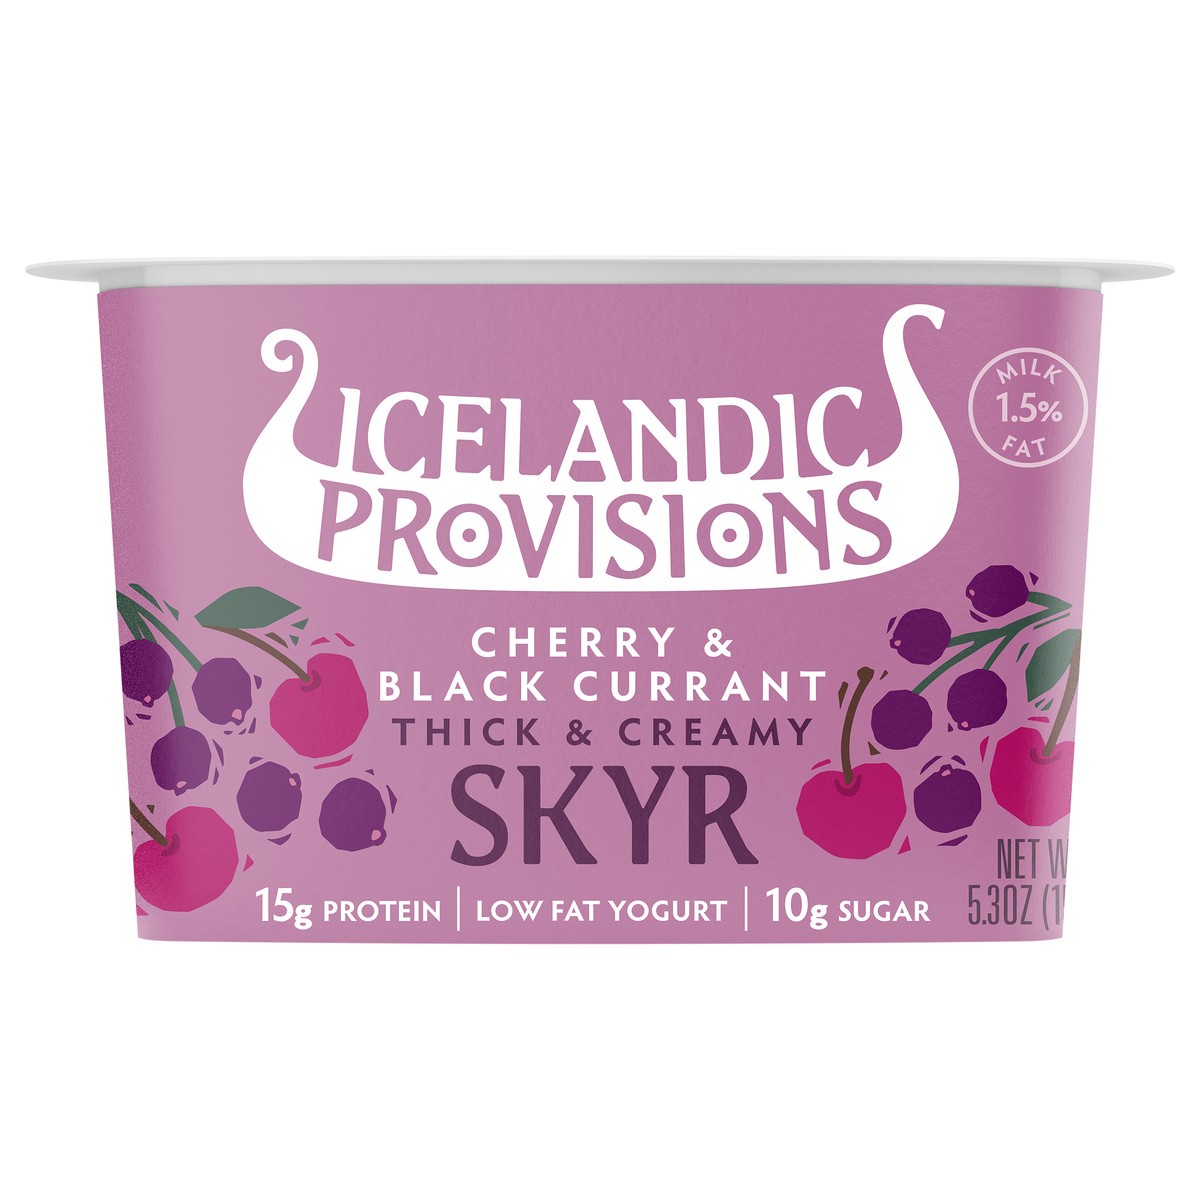 slide 7 of 8, Icelandic Provisions Cherry & Black Currant Thick & Creamy Low Fat Skyr 5.3 oz, 5.3 oz